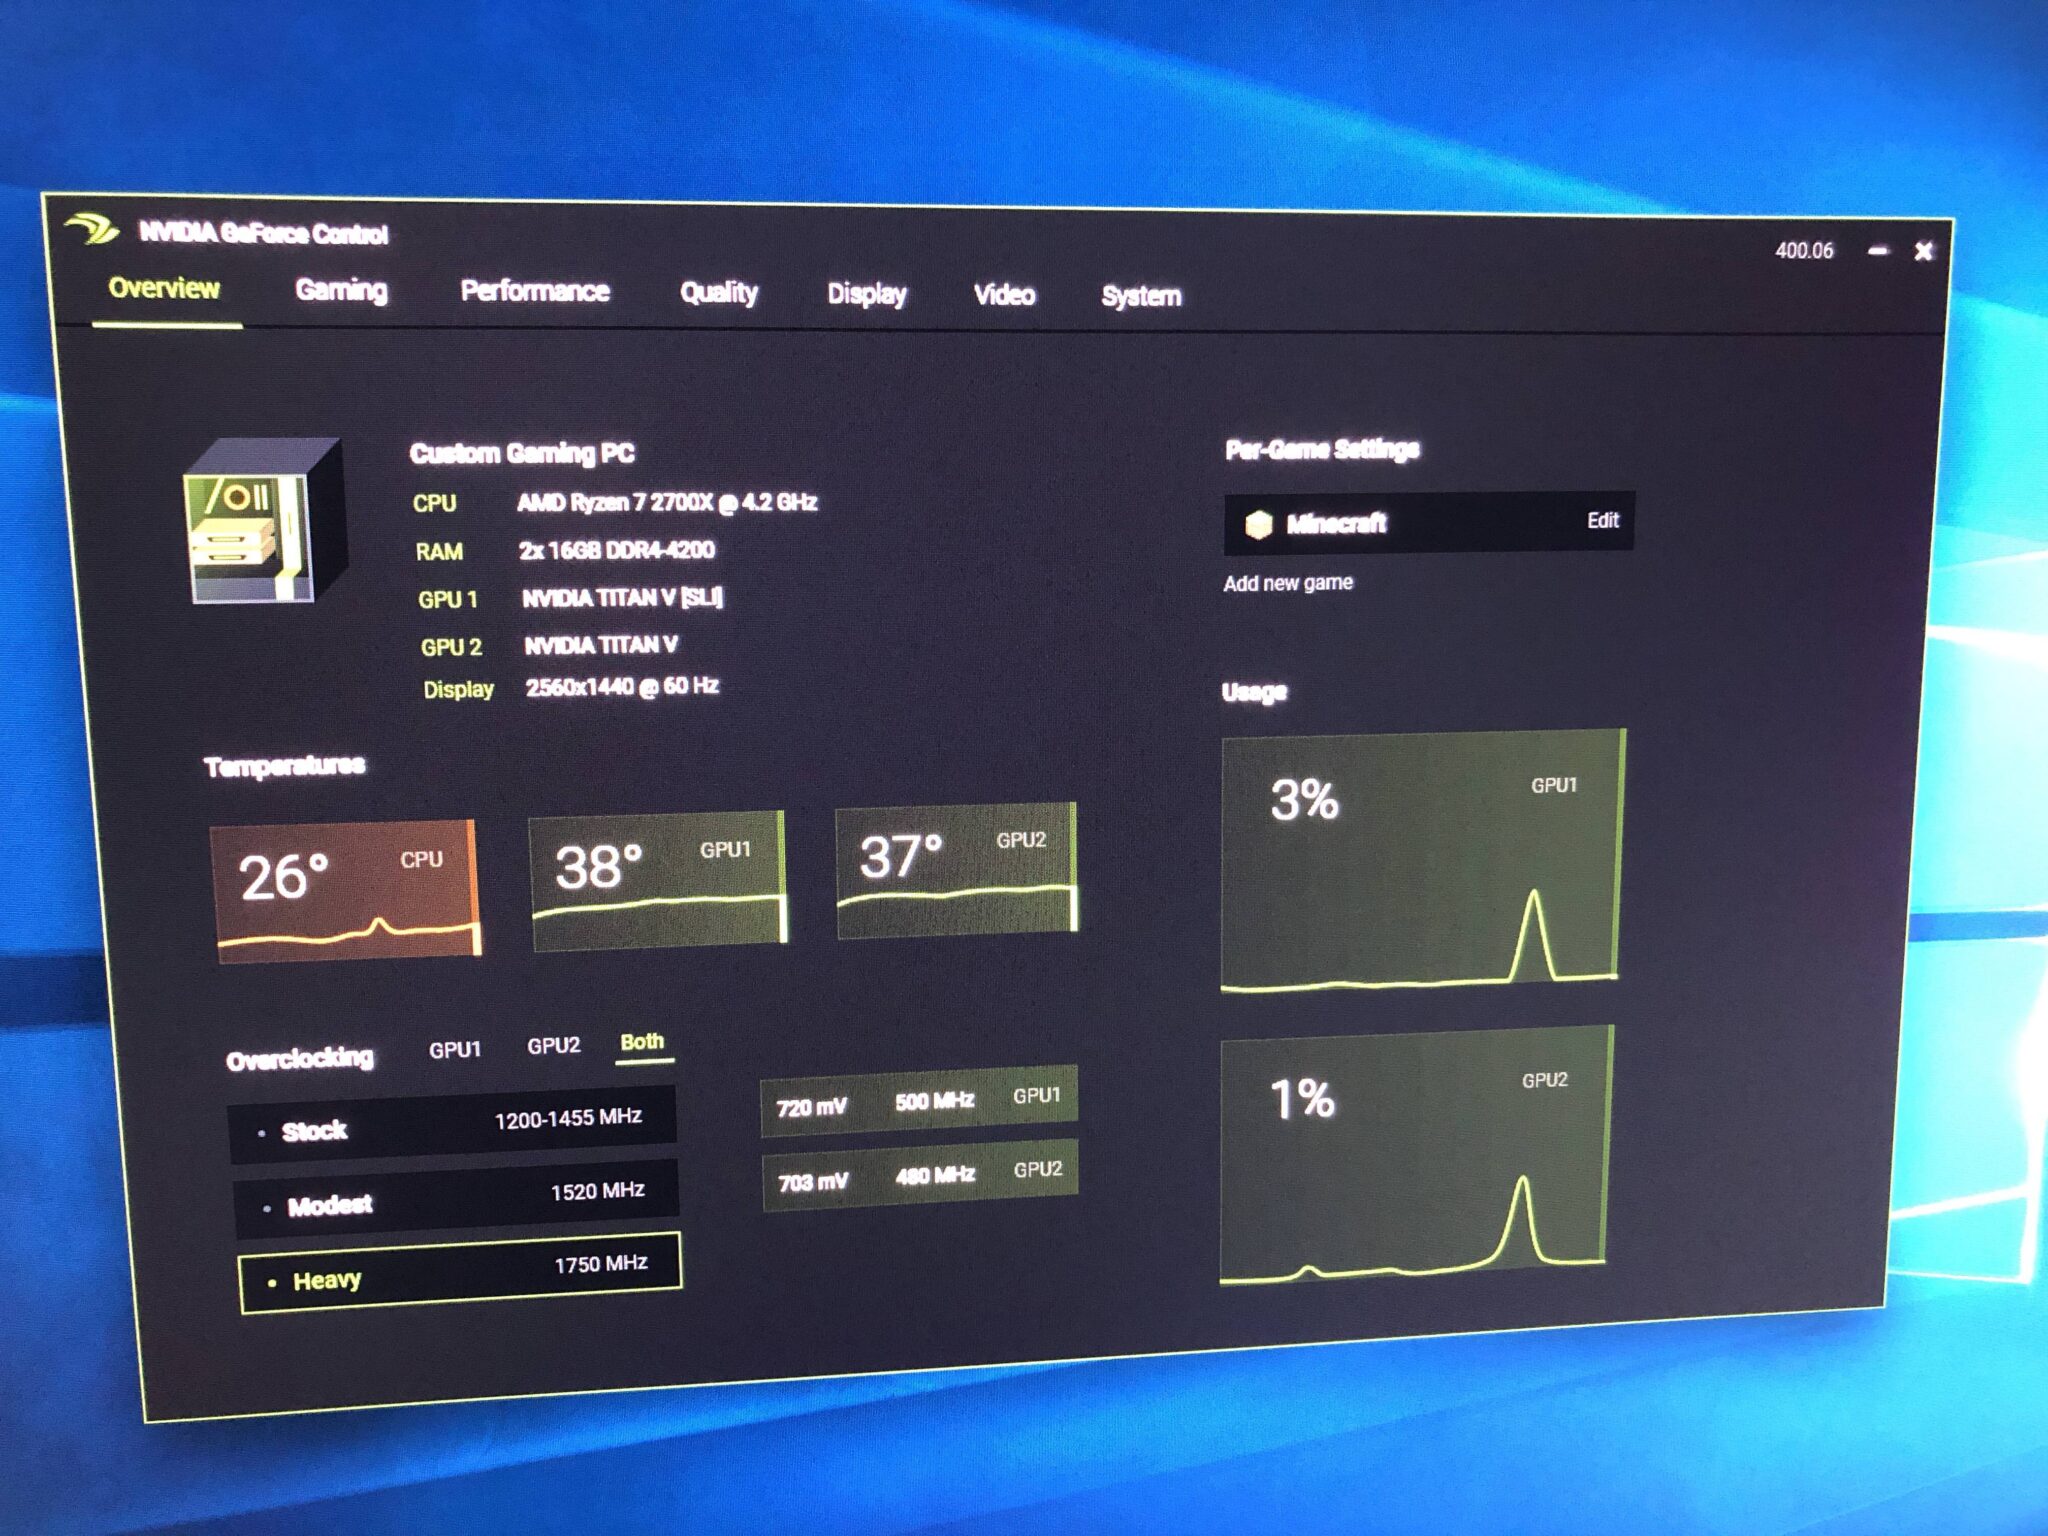 nvidia control panel windows 10 choosing gpu